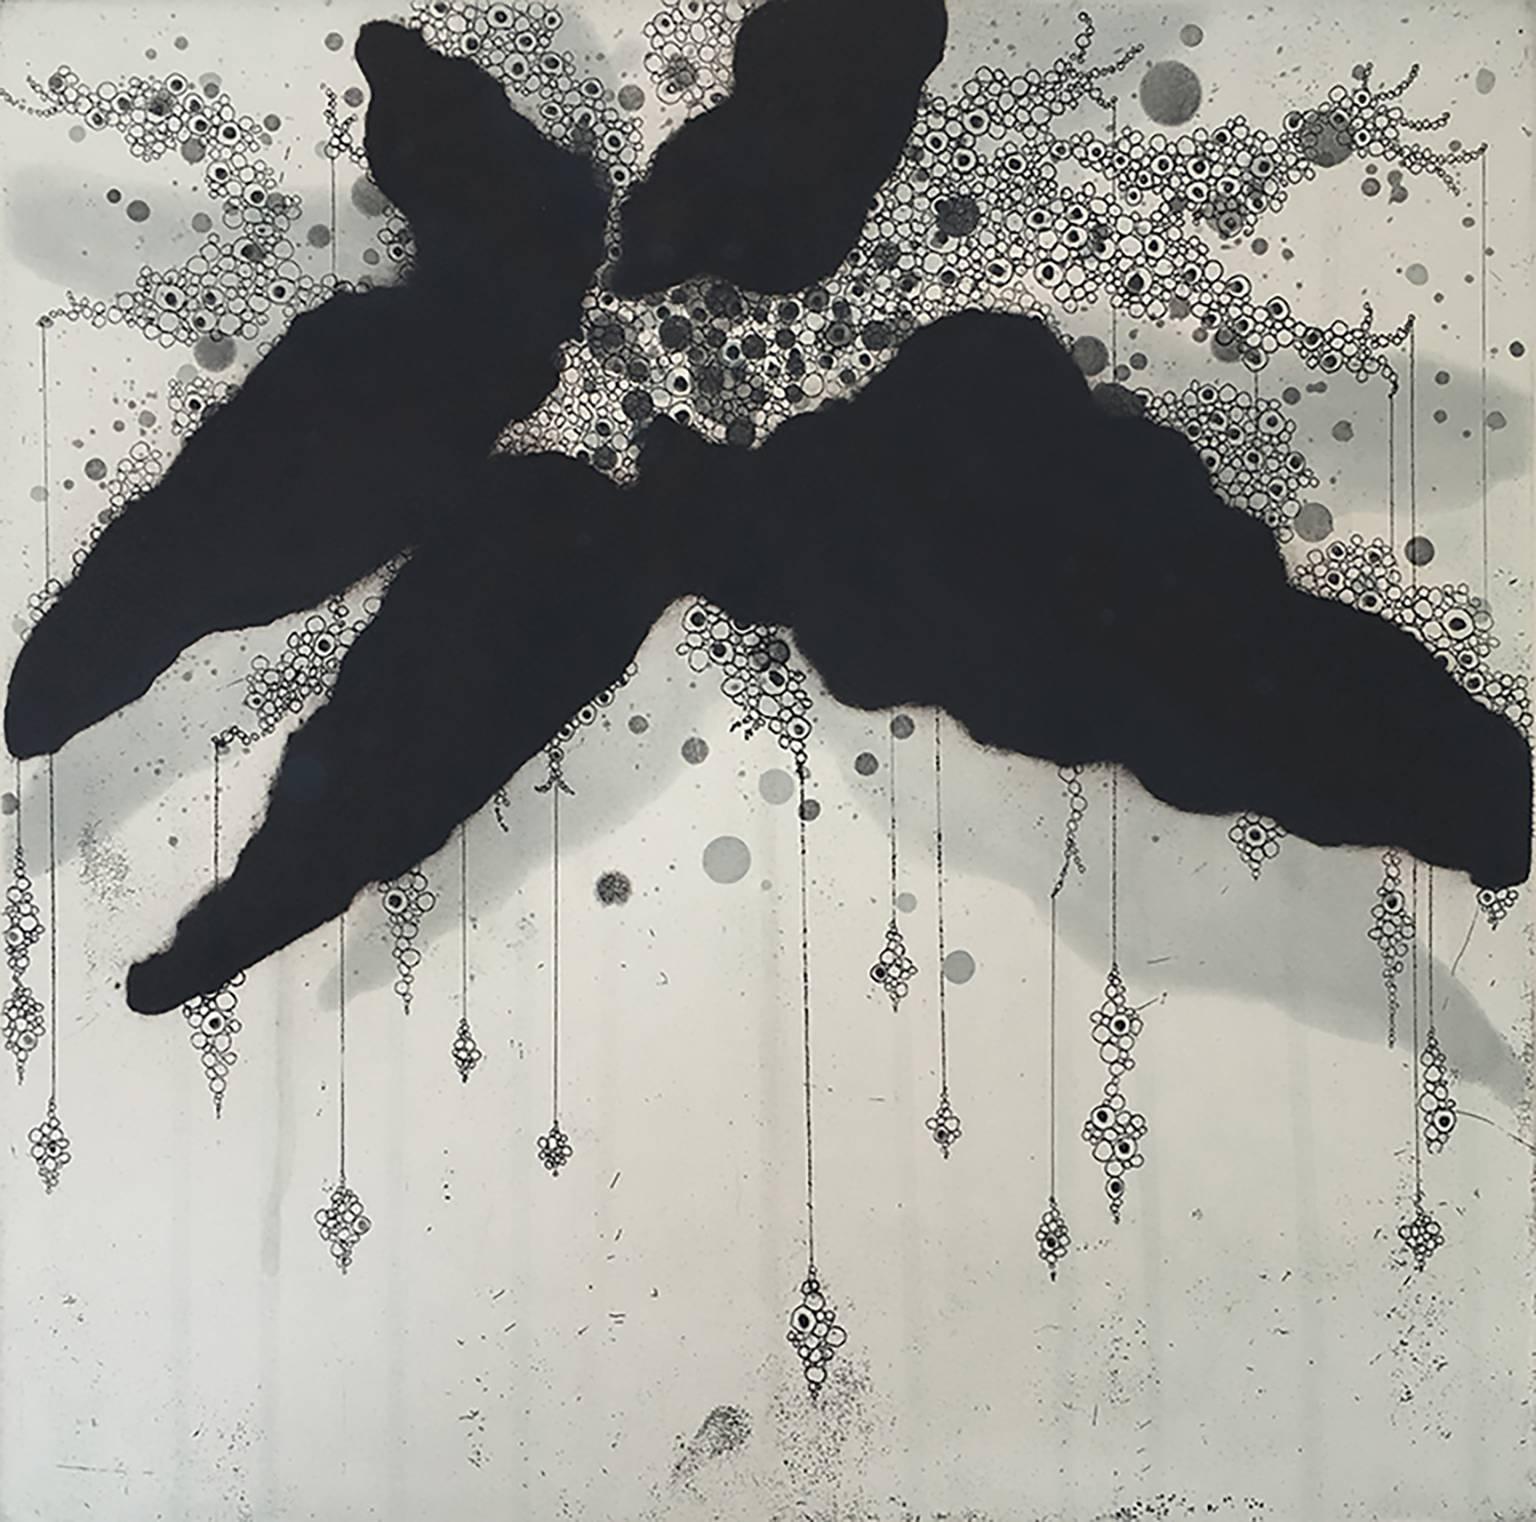 Seiko Tachibana Abstract Print - Fern-4a